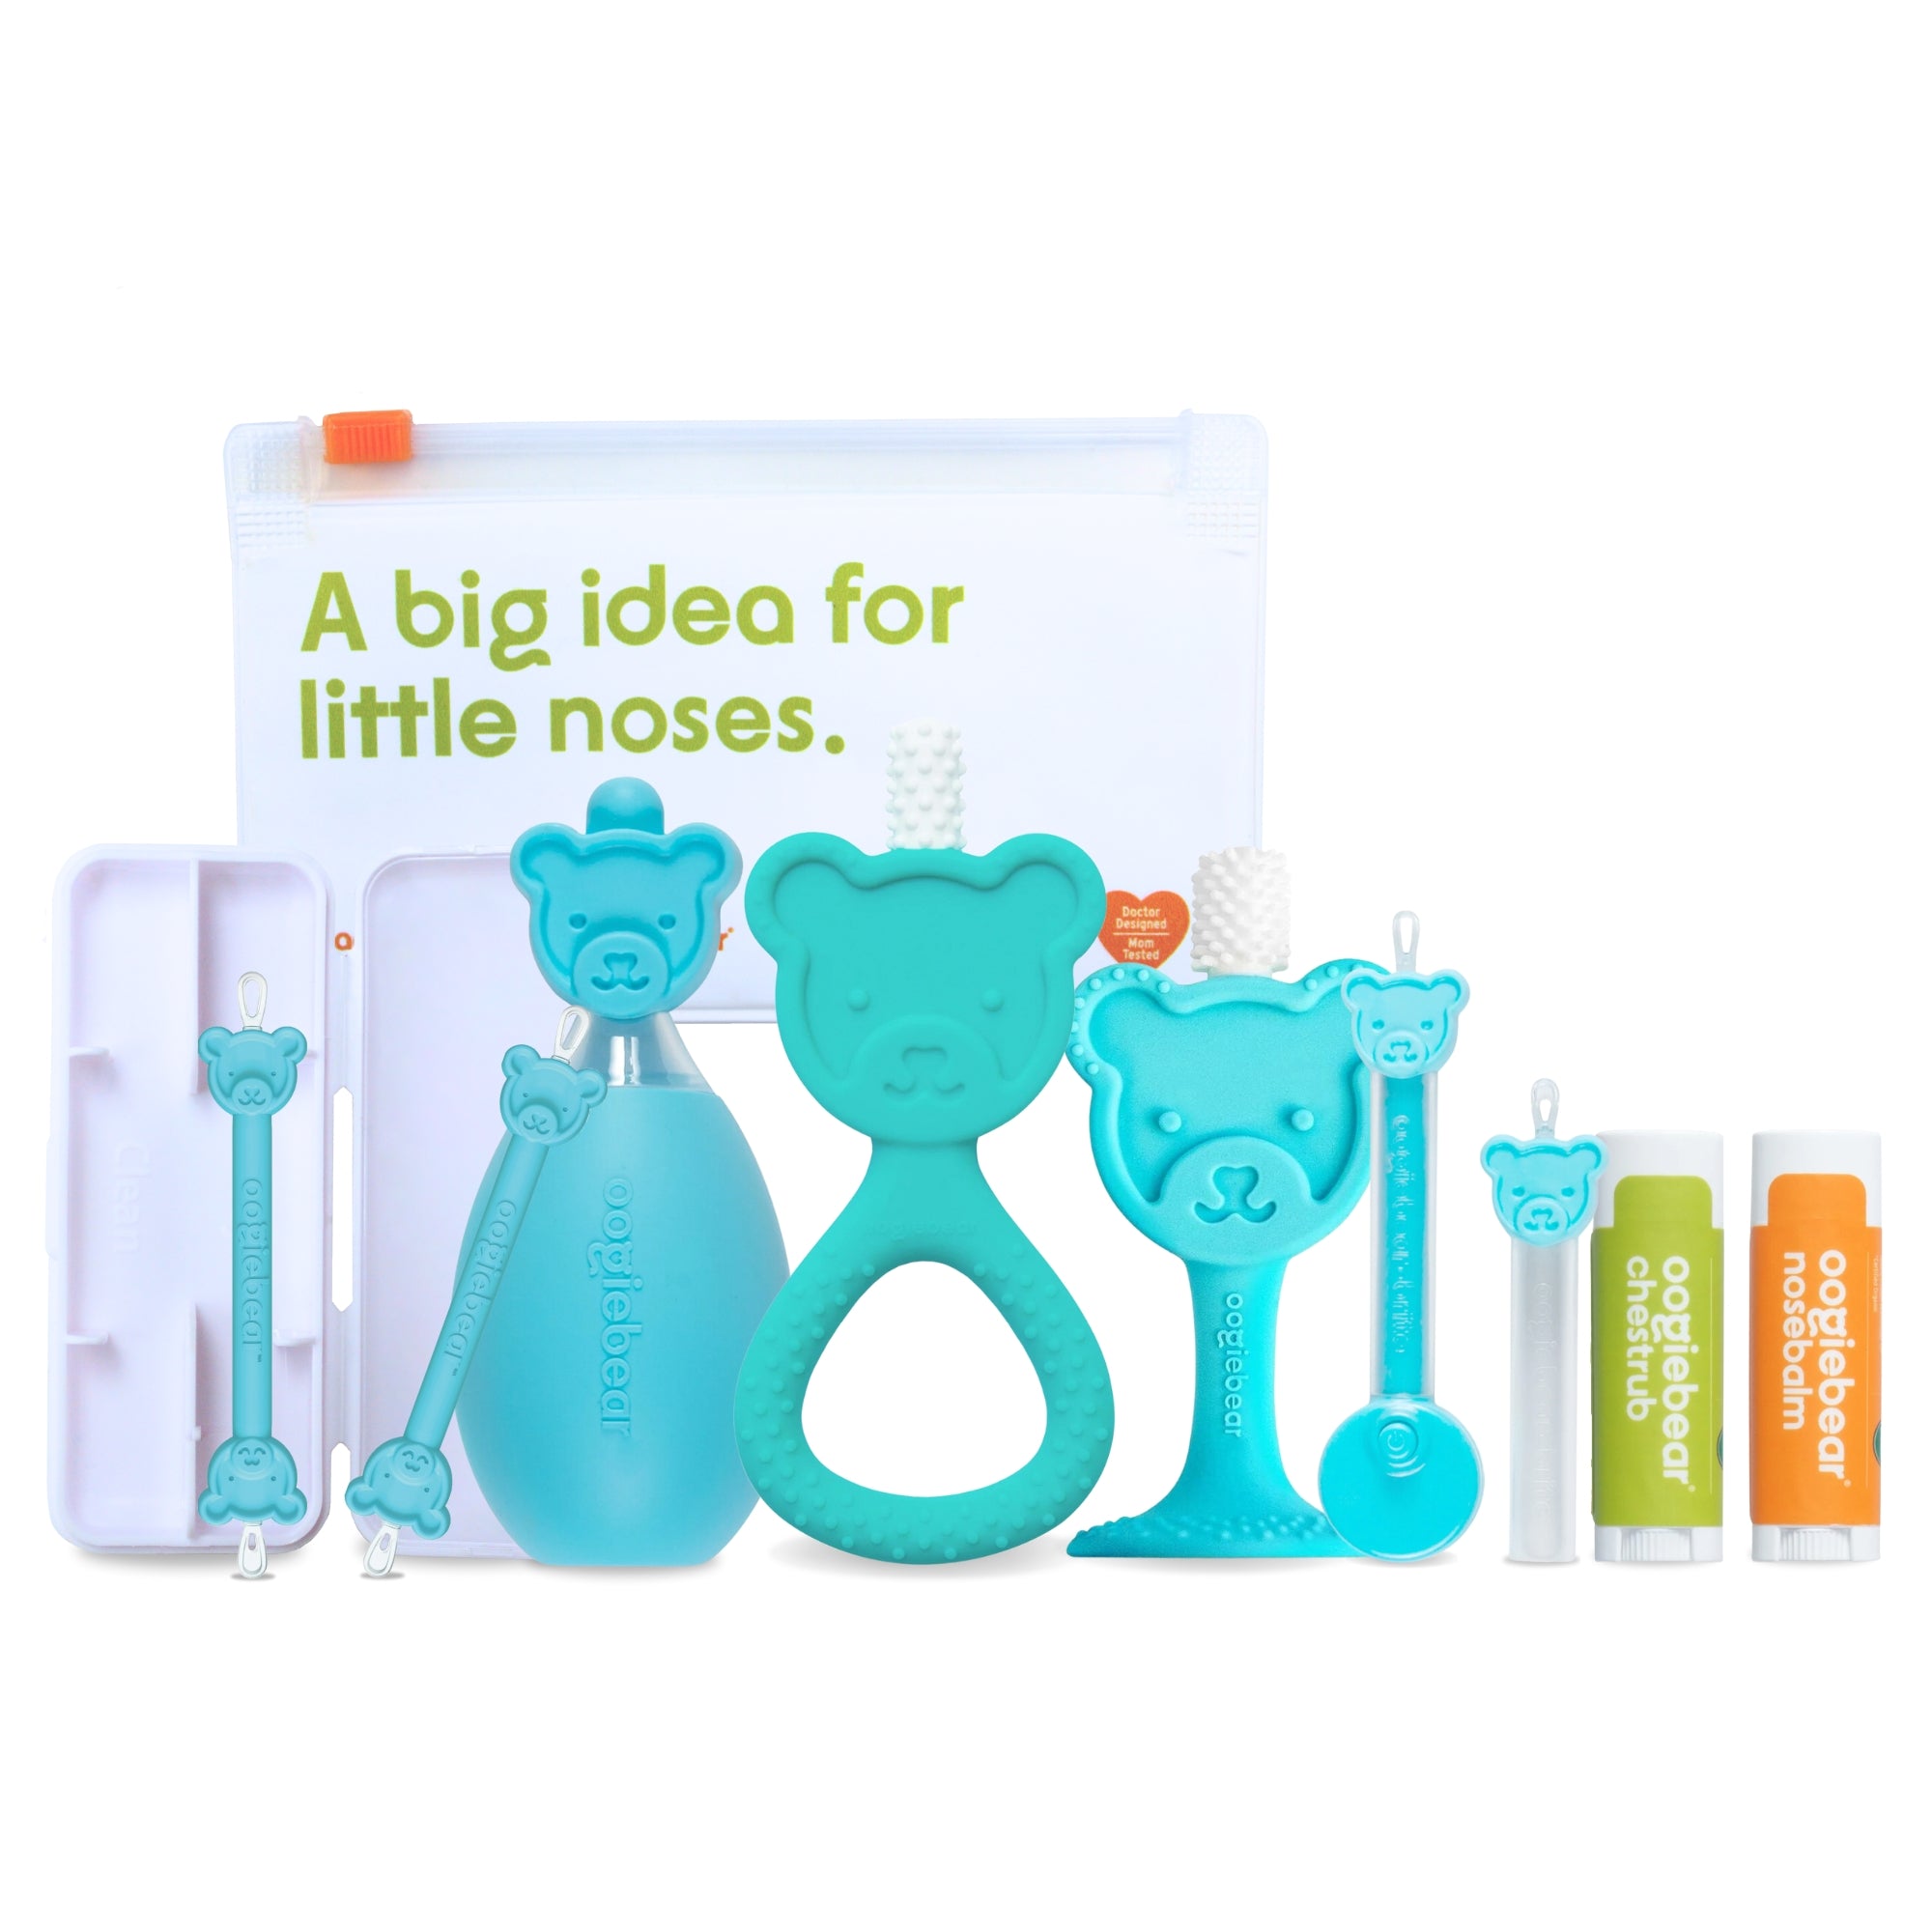 oogiebear new parent gift set - newborn baby care essentials